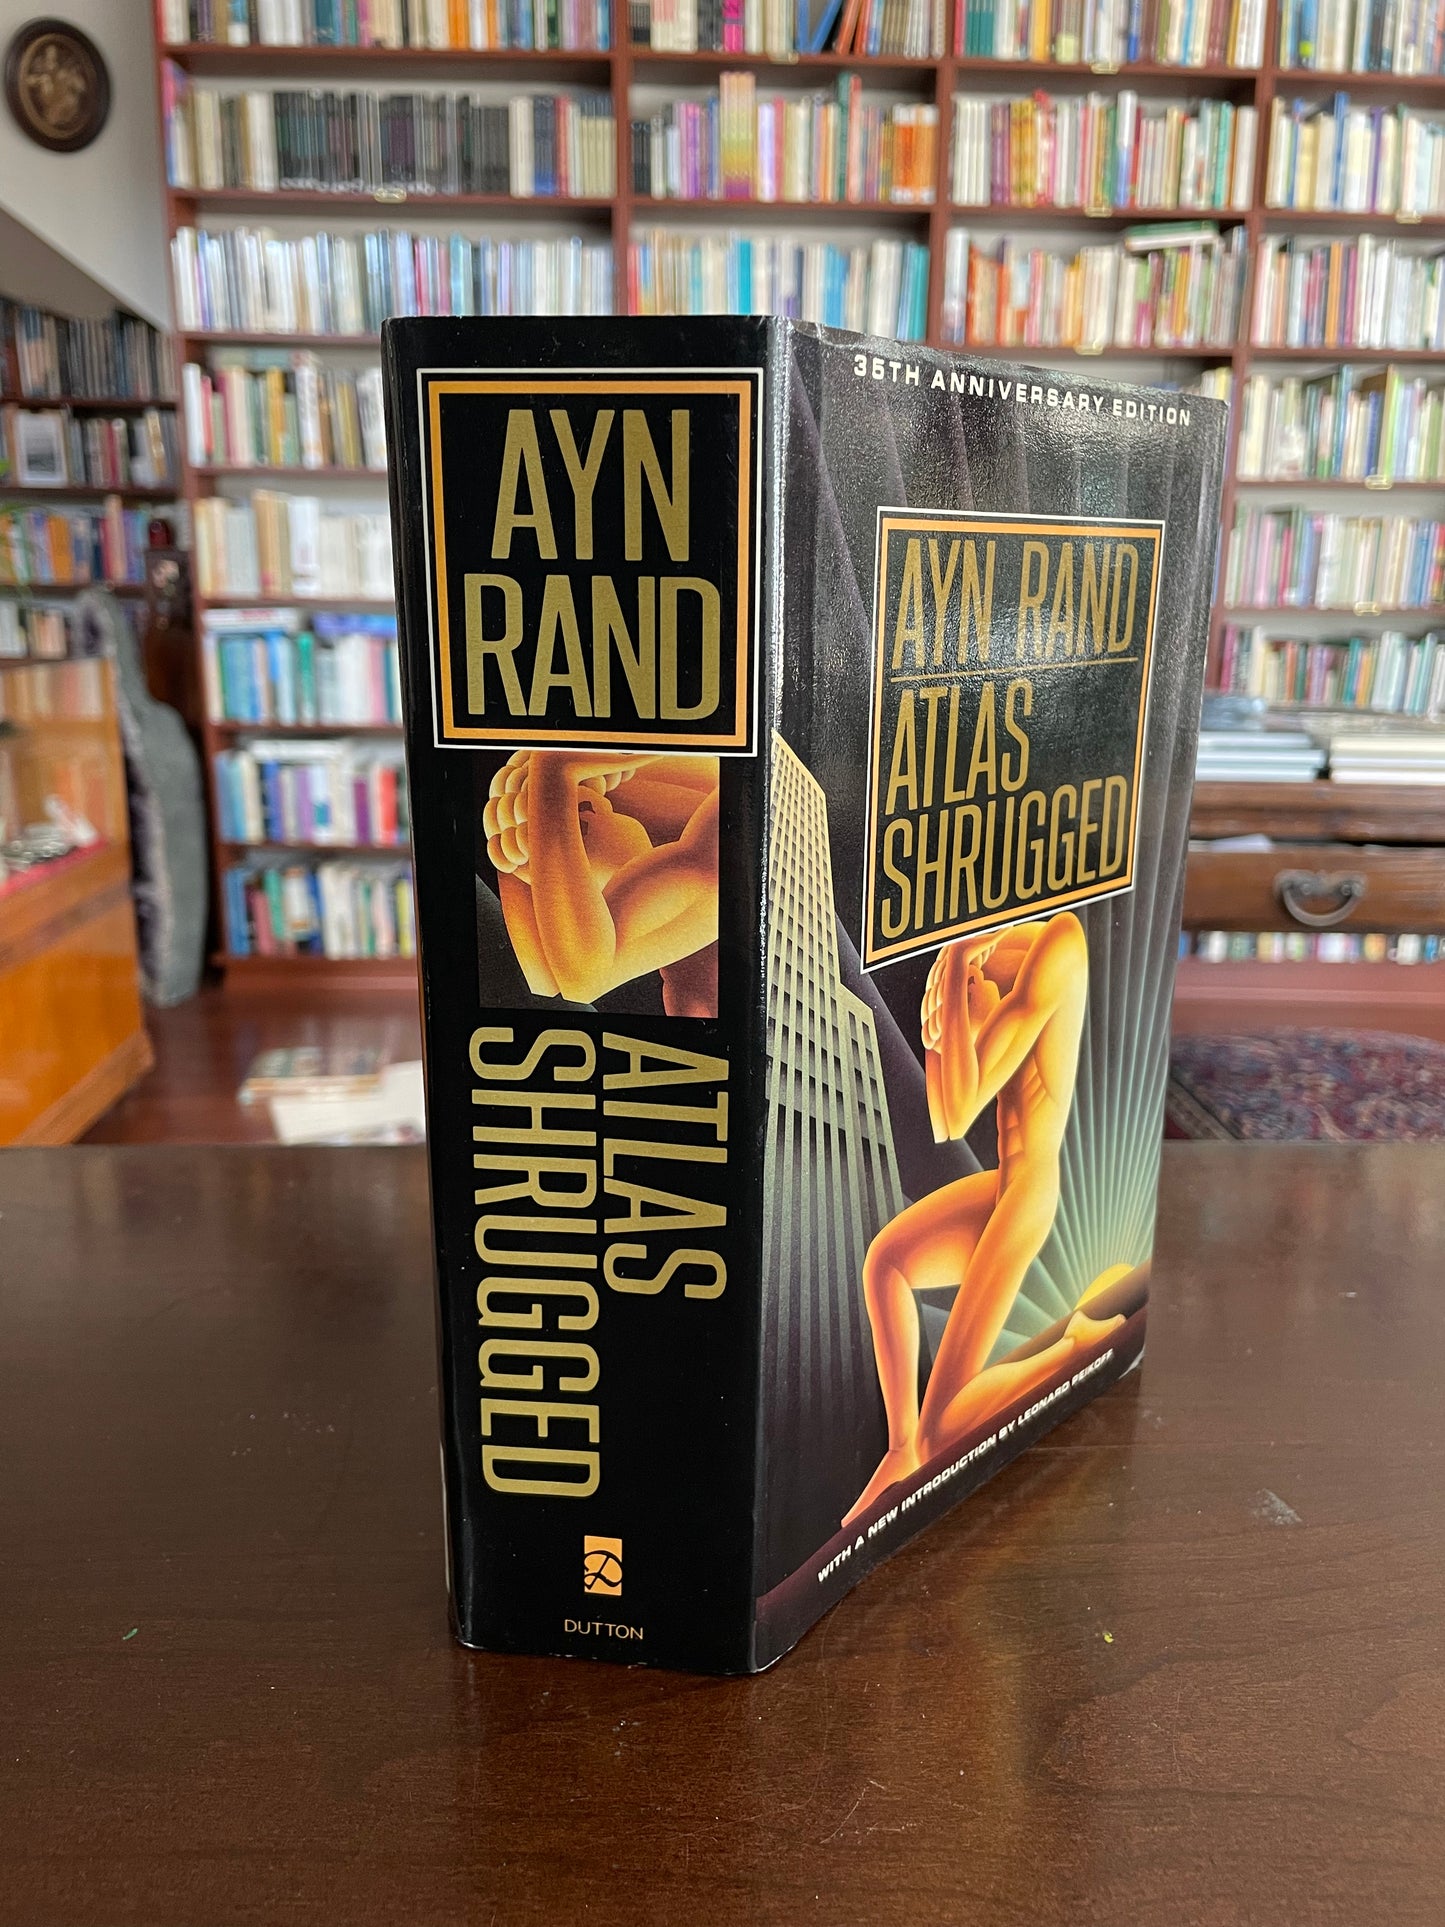 Atlas Shrugged by Ayn Rand (35th anniversary)